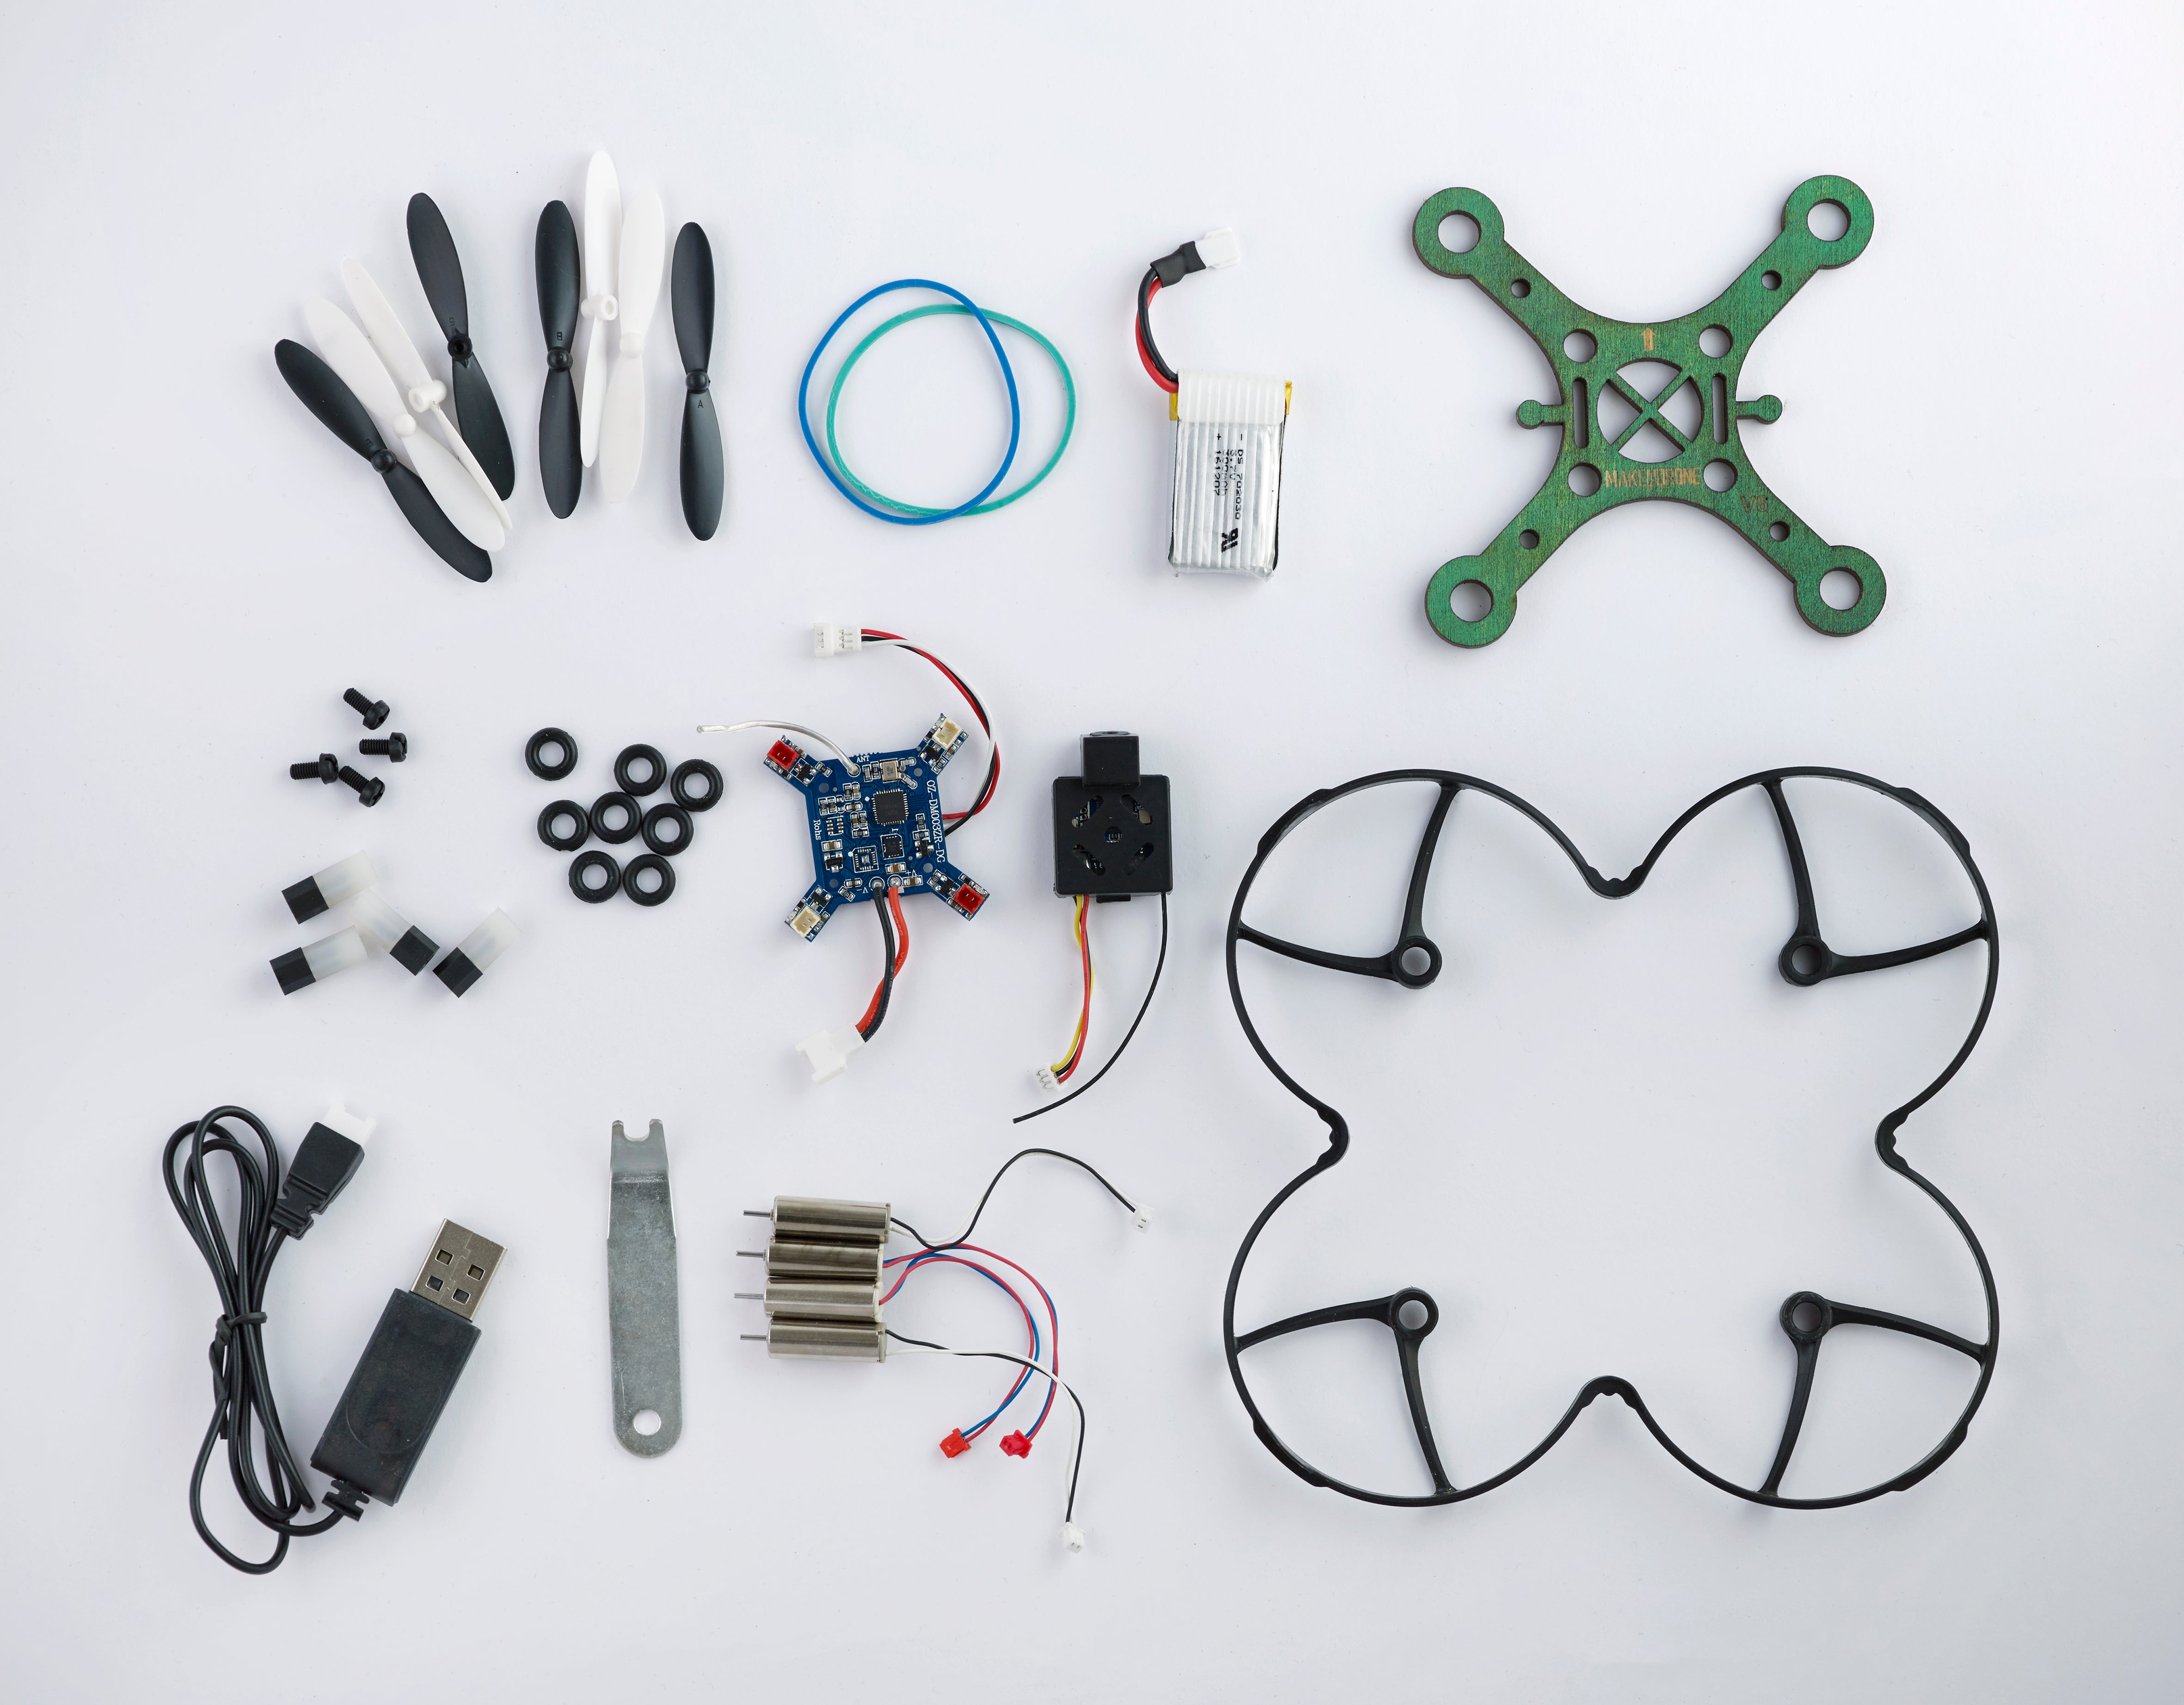 Hummingbird drone building kit with camera